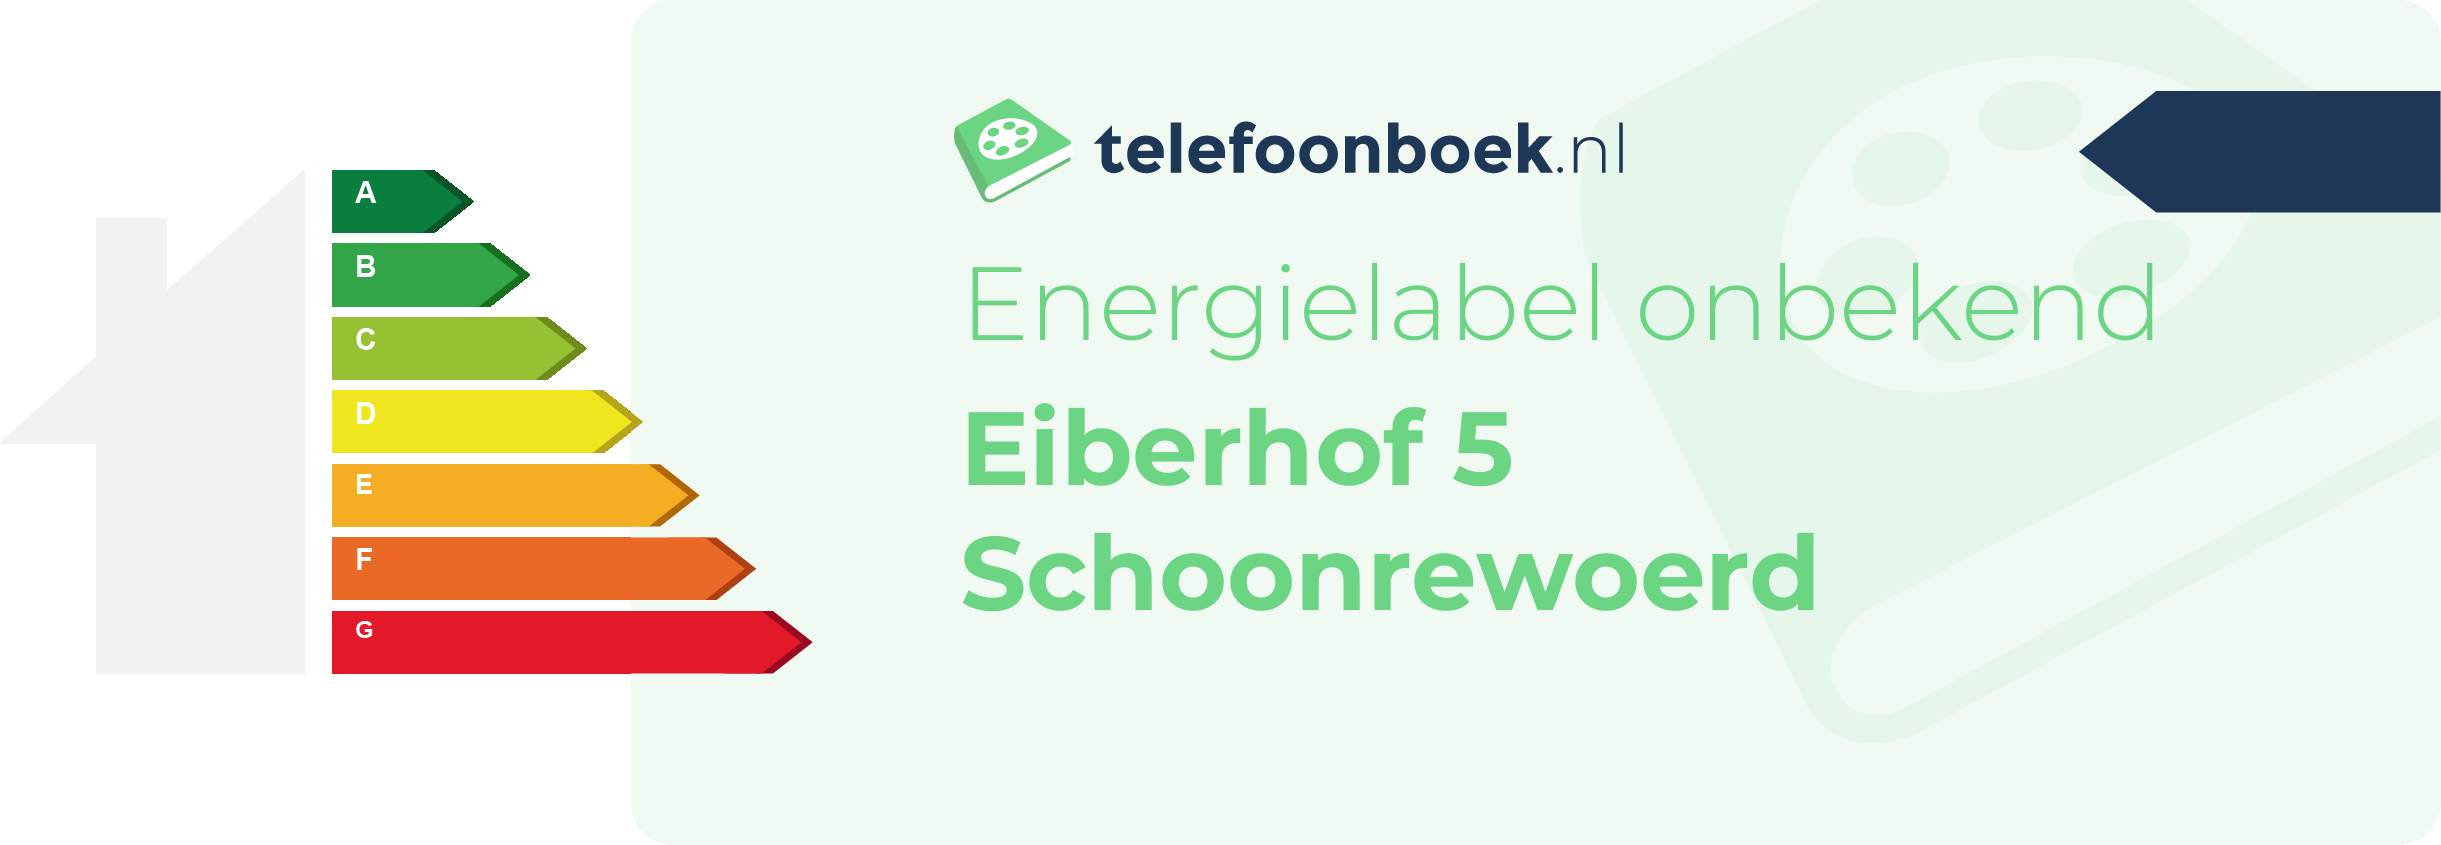 Energielabel Eiberhof 5 Schoonrewoerd